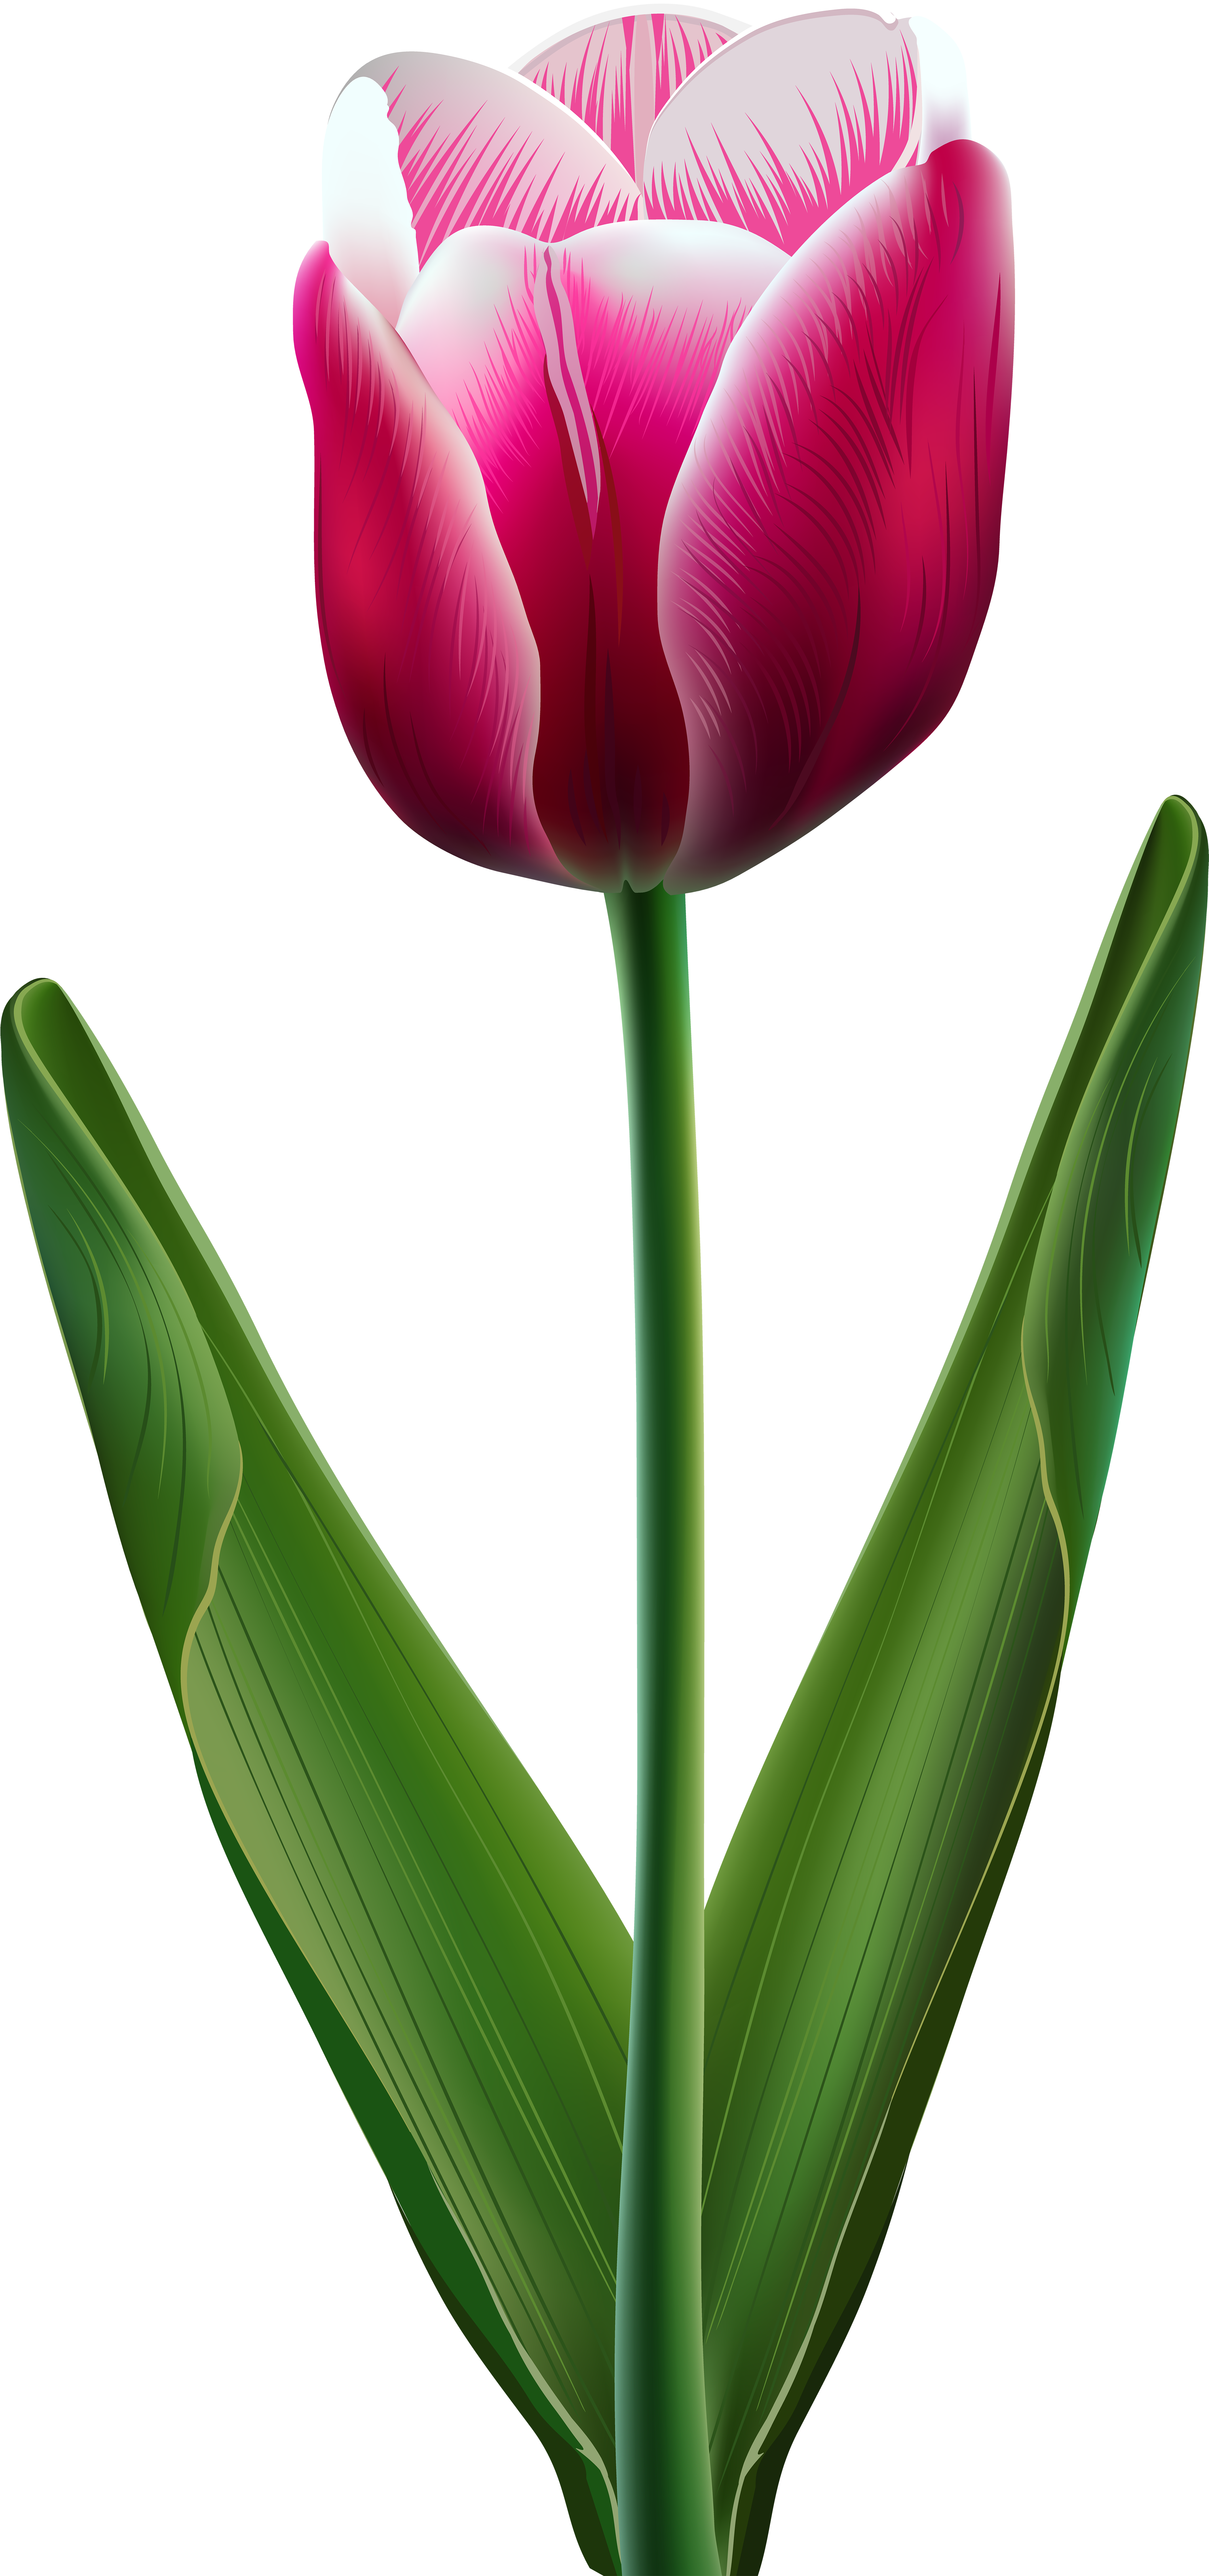 Sprenger's Tulip (3812x8000)